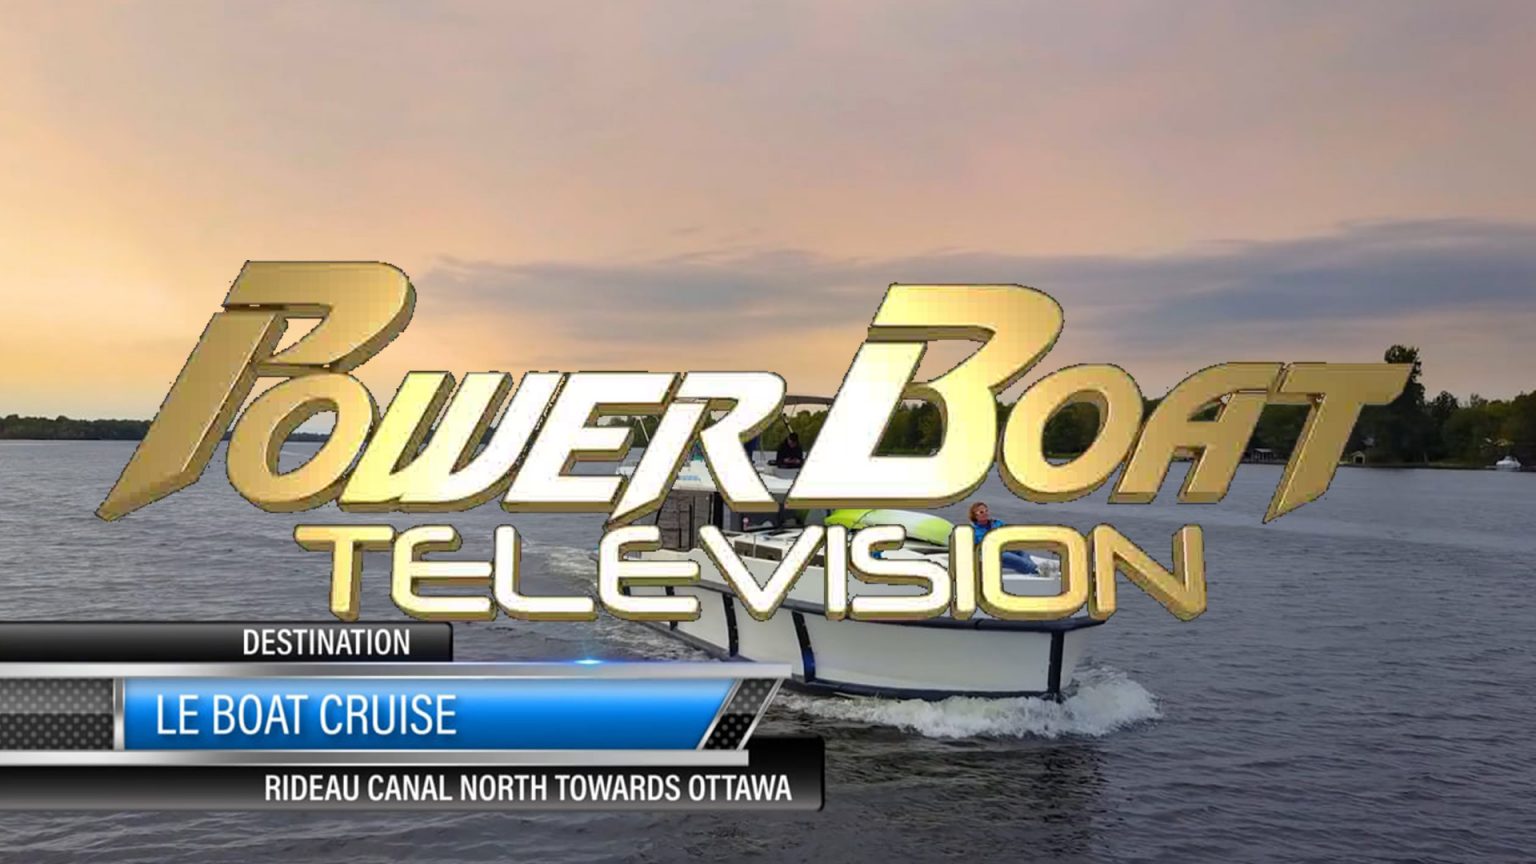 powerboat television 2022 schedule